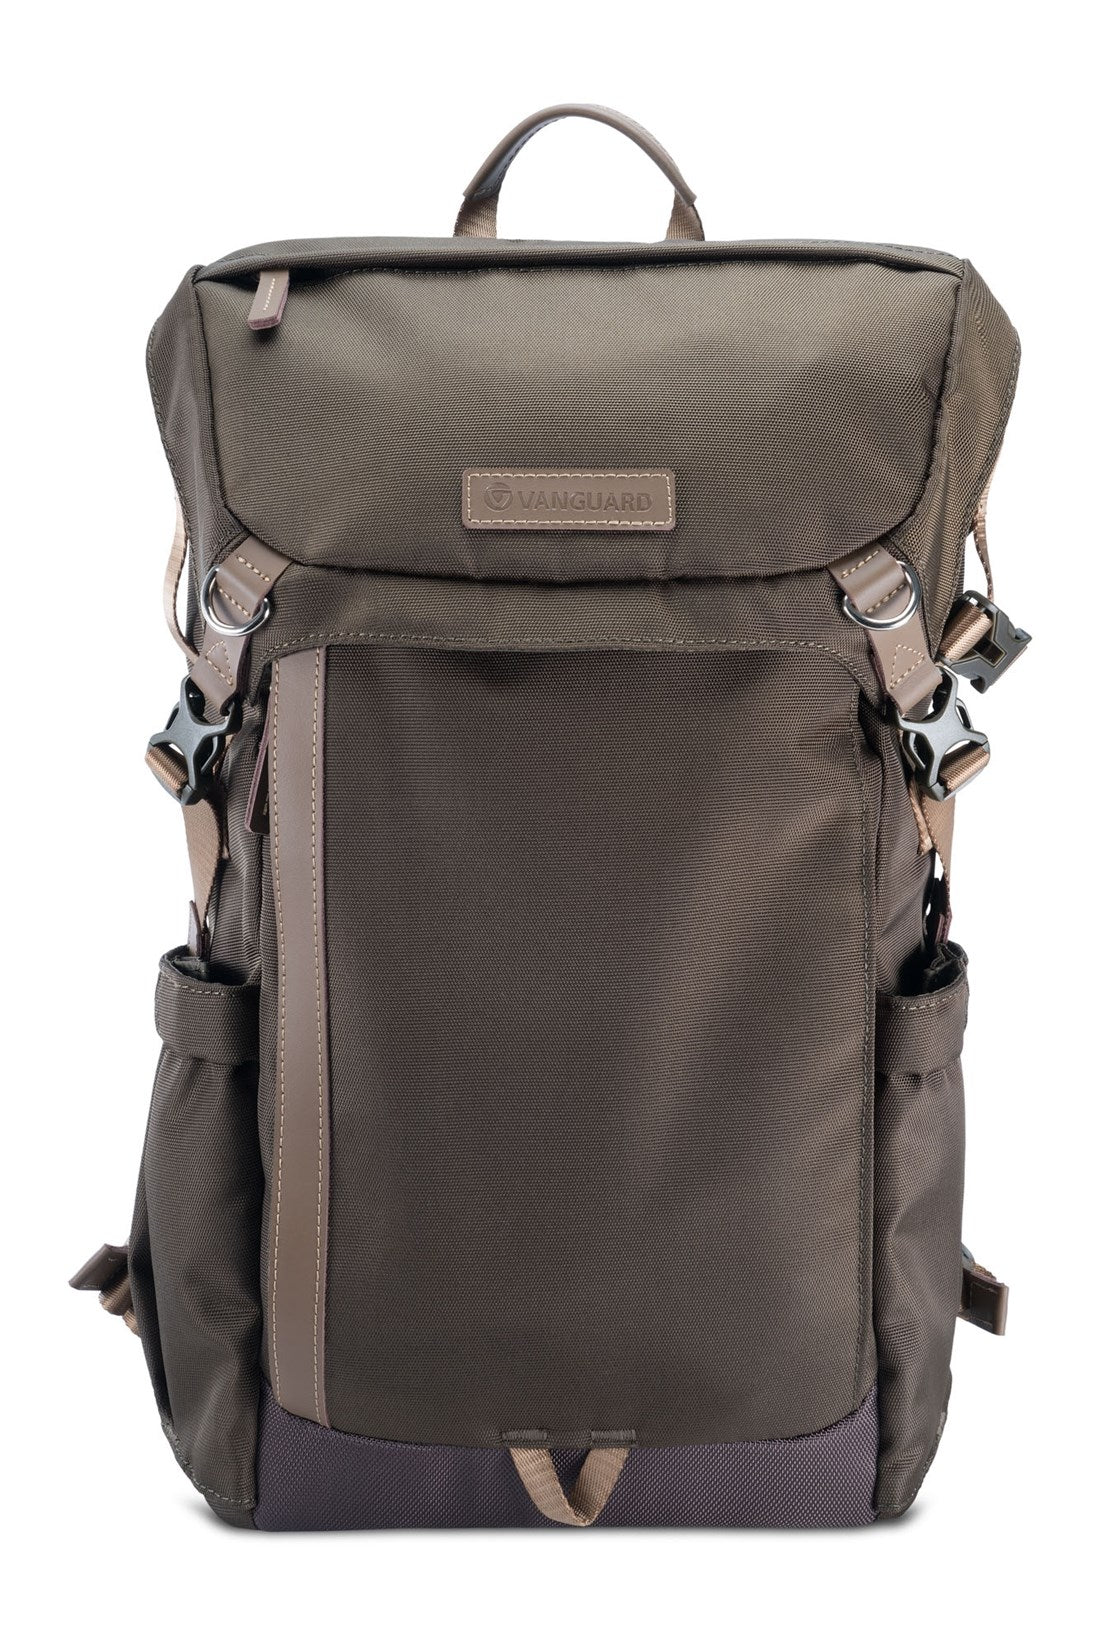 Vesta Aspire 25 GY Shoulder Bag - Grey - Vanguard